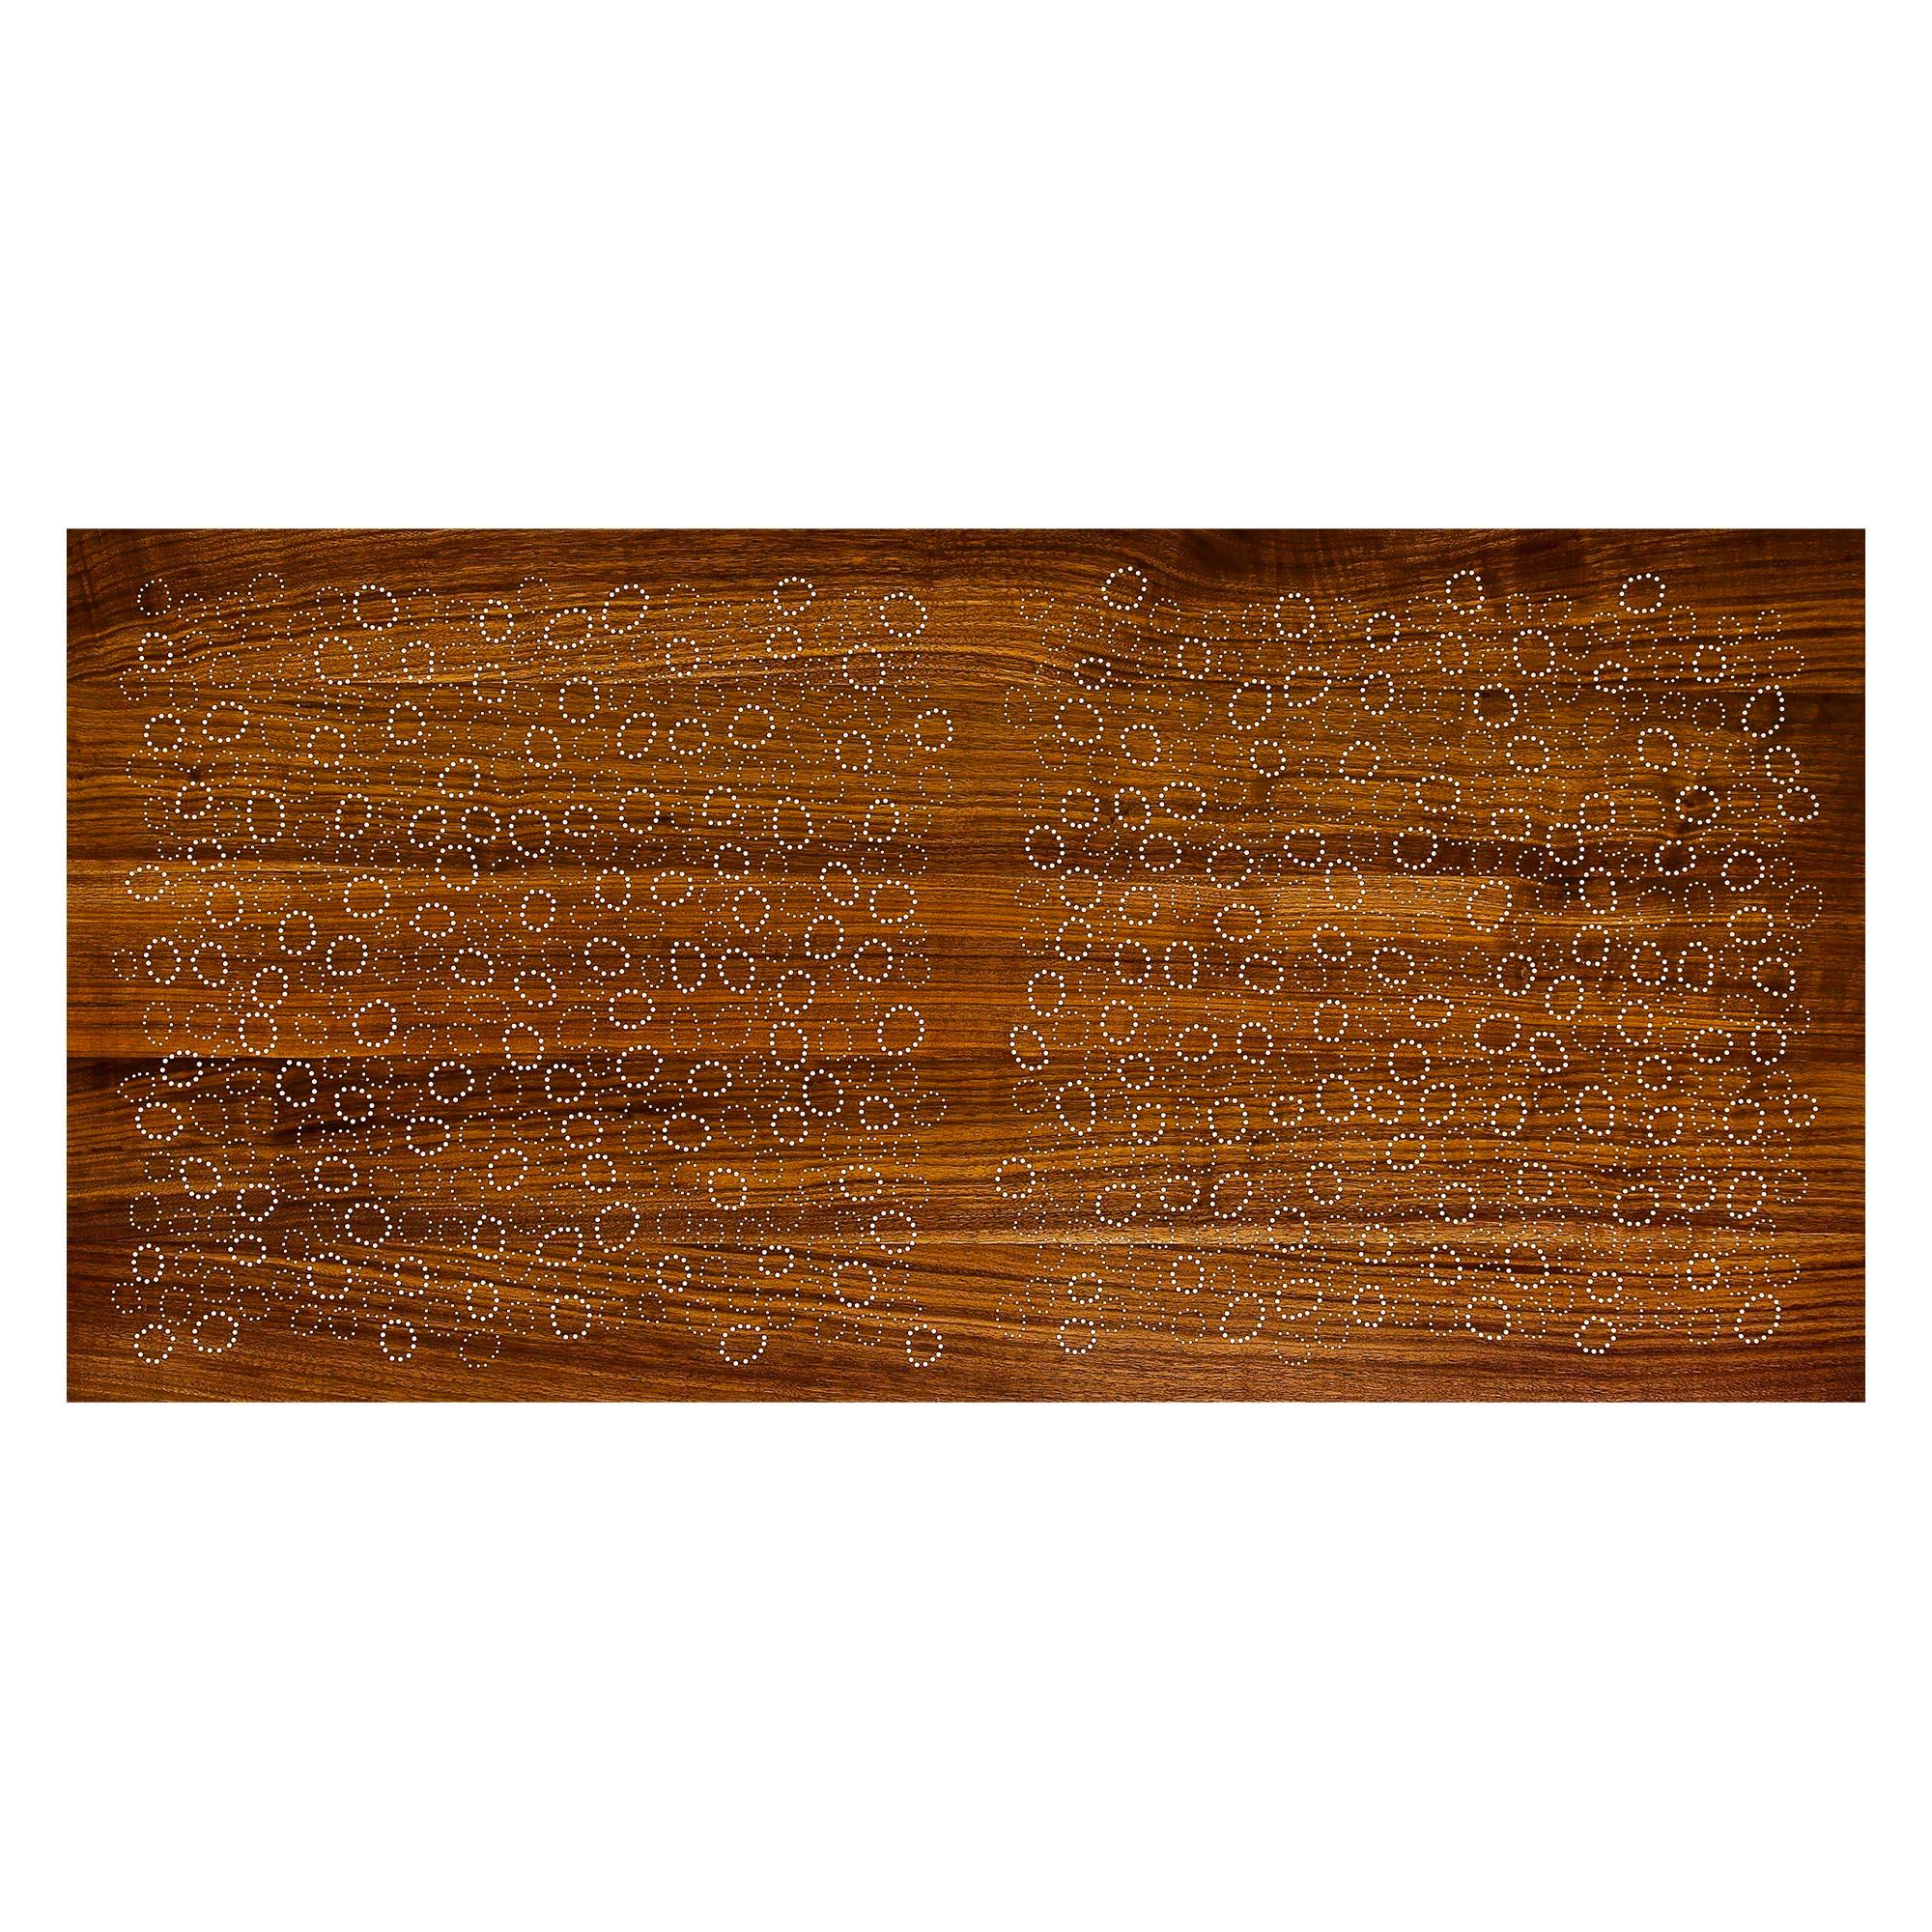 Modern contemporary nail inlay coffee table no. 27 by Peter Sandback. 
natural walnut, nails
Measures: 26